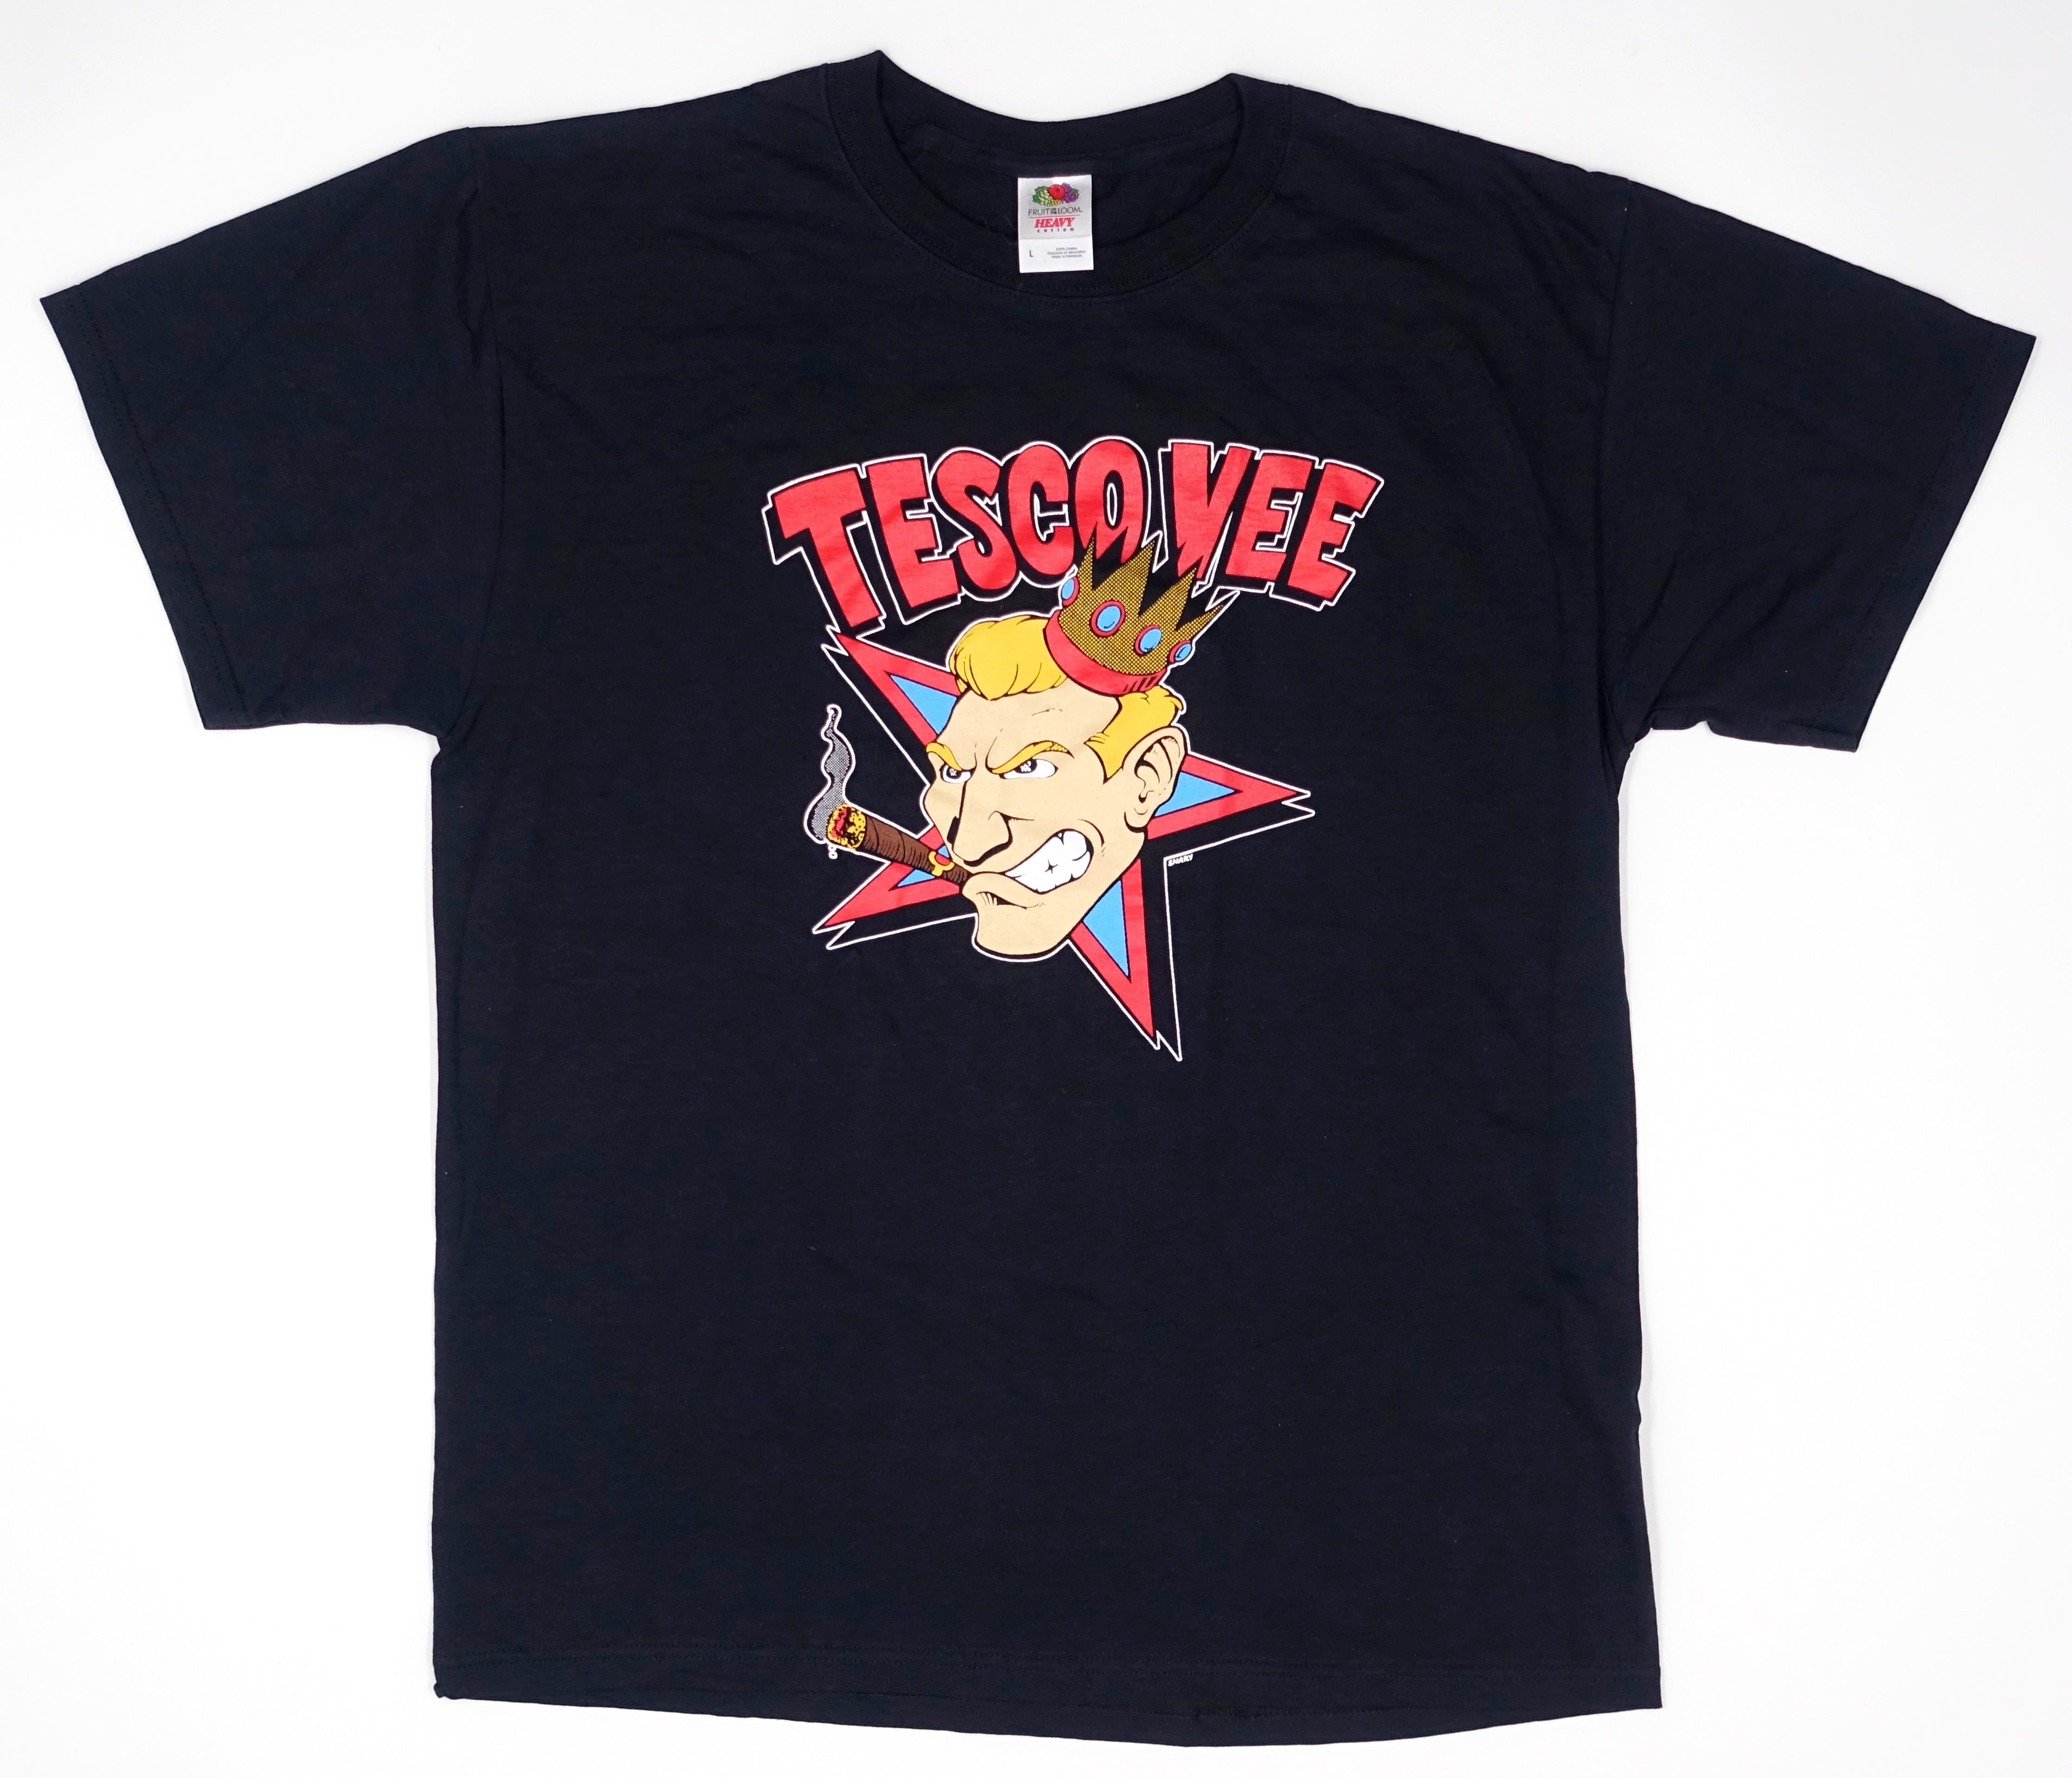 Tesco Vee - Cigar Smokin Tesco by Chris Shary Tour Shirt Size Large